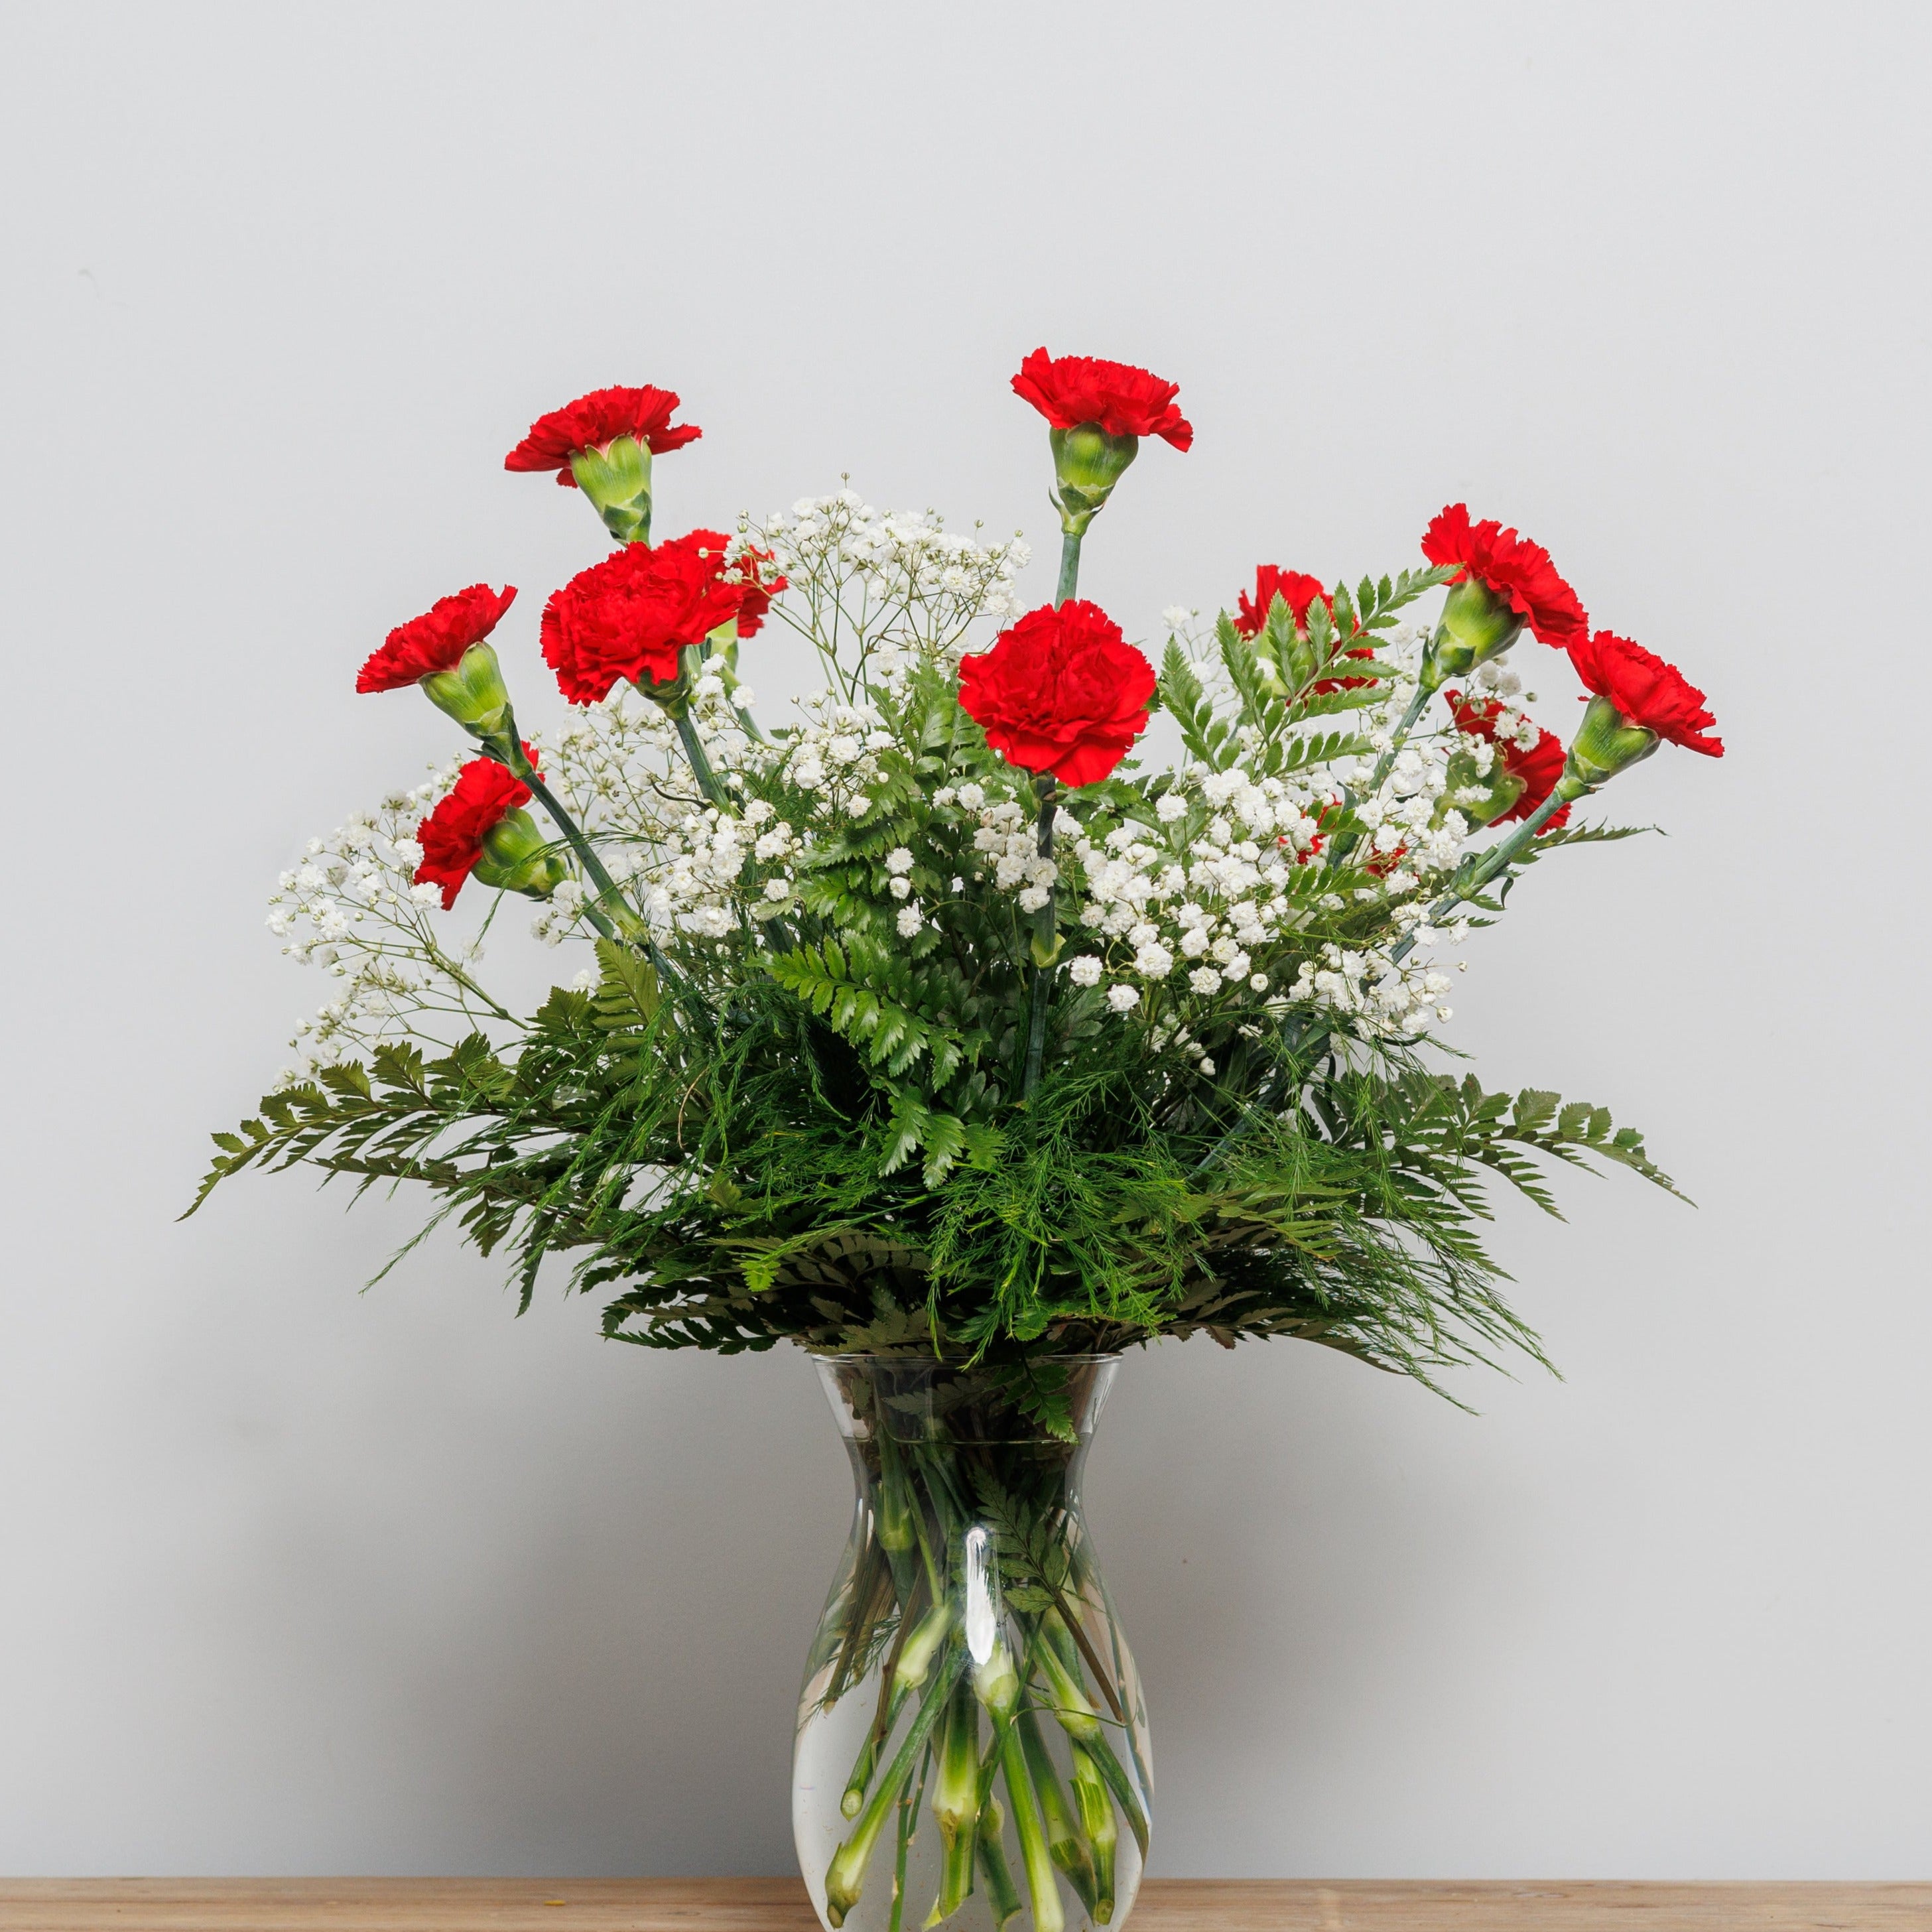 A vase arrangement with a dozen red carnations